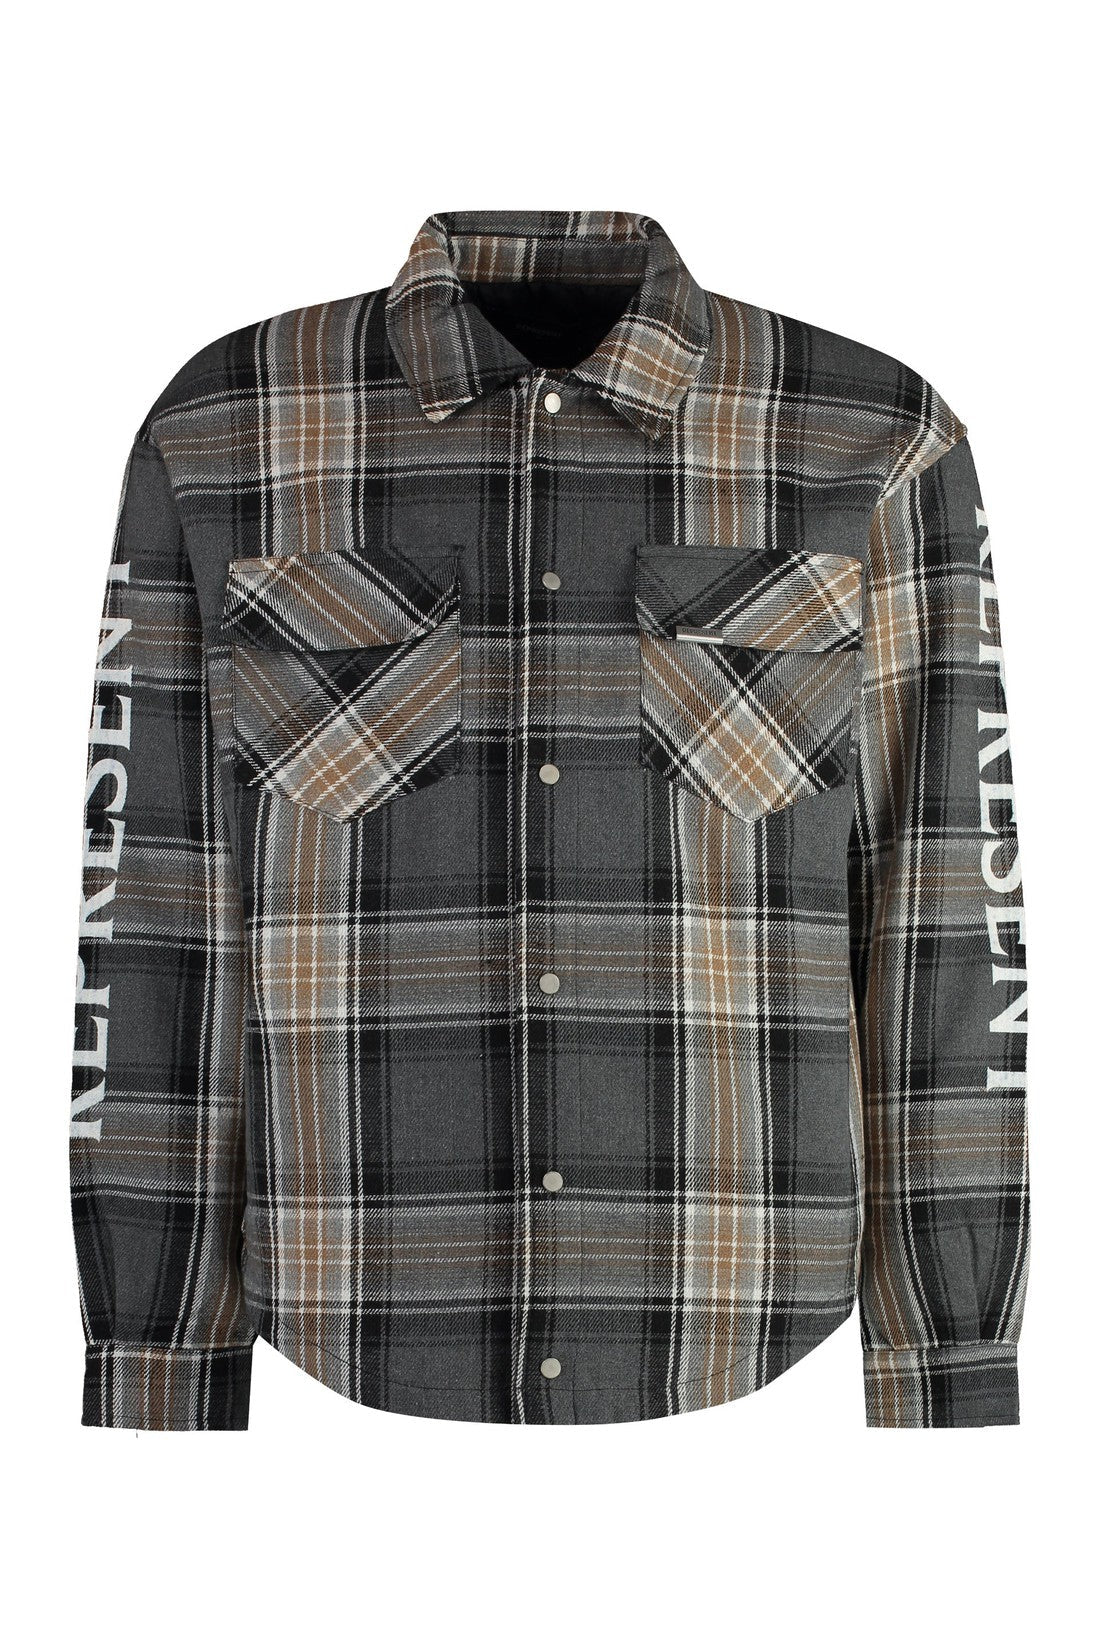 Represent-OUTLET-SALE-Flannel overshirt-ARCHIVIST